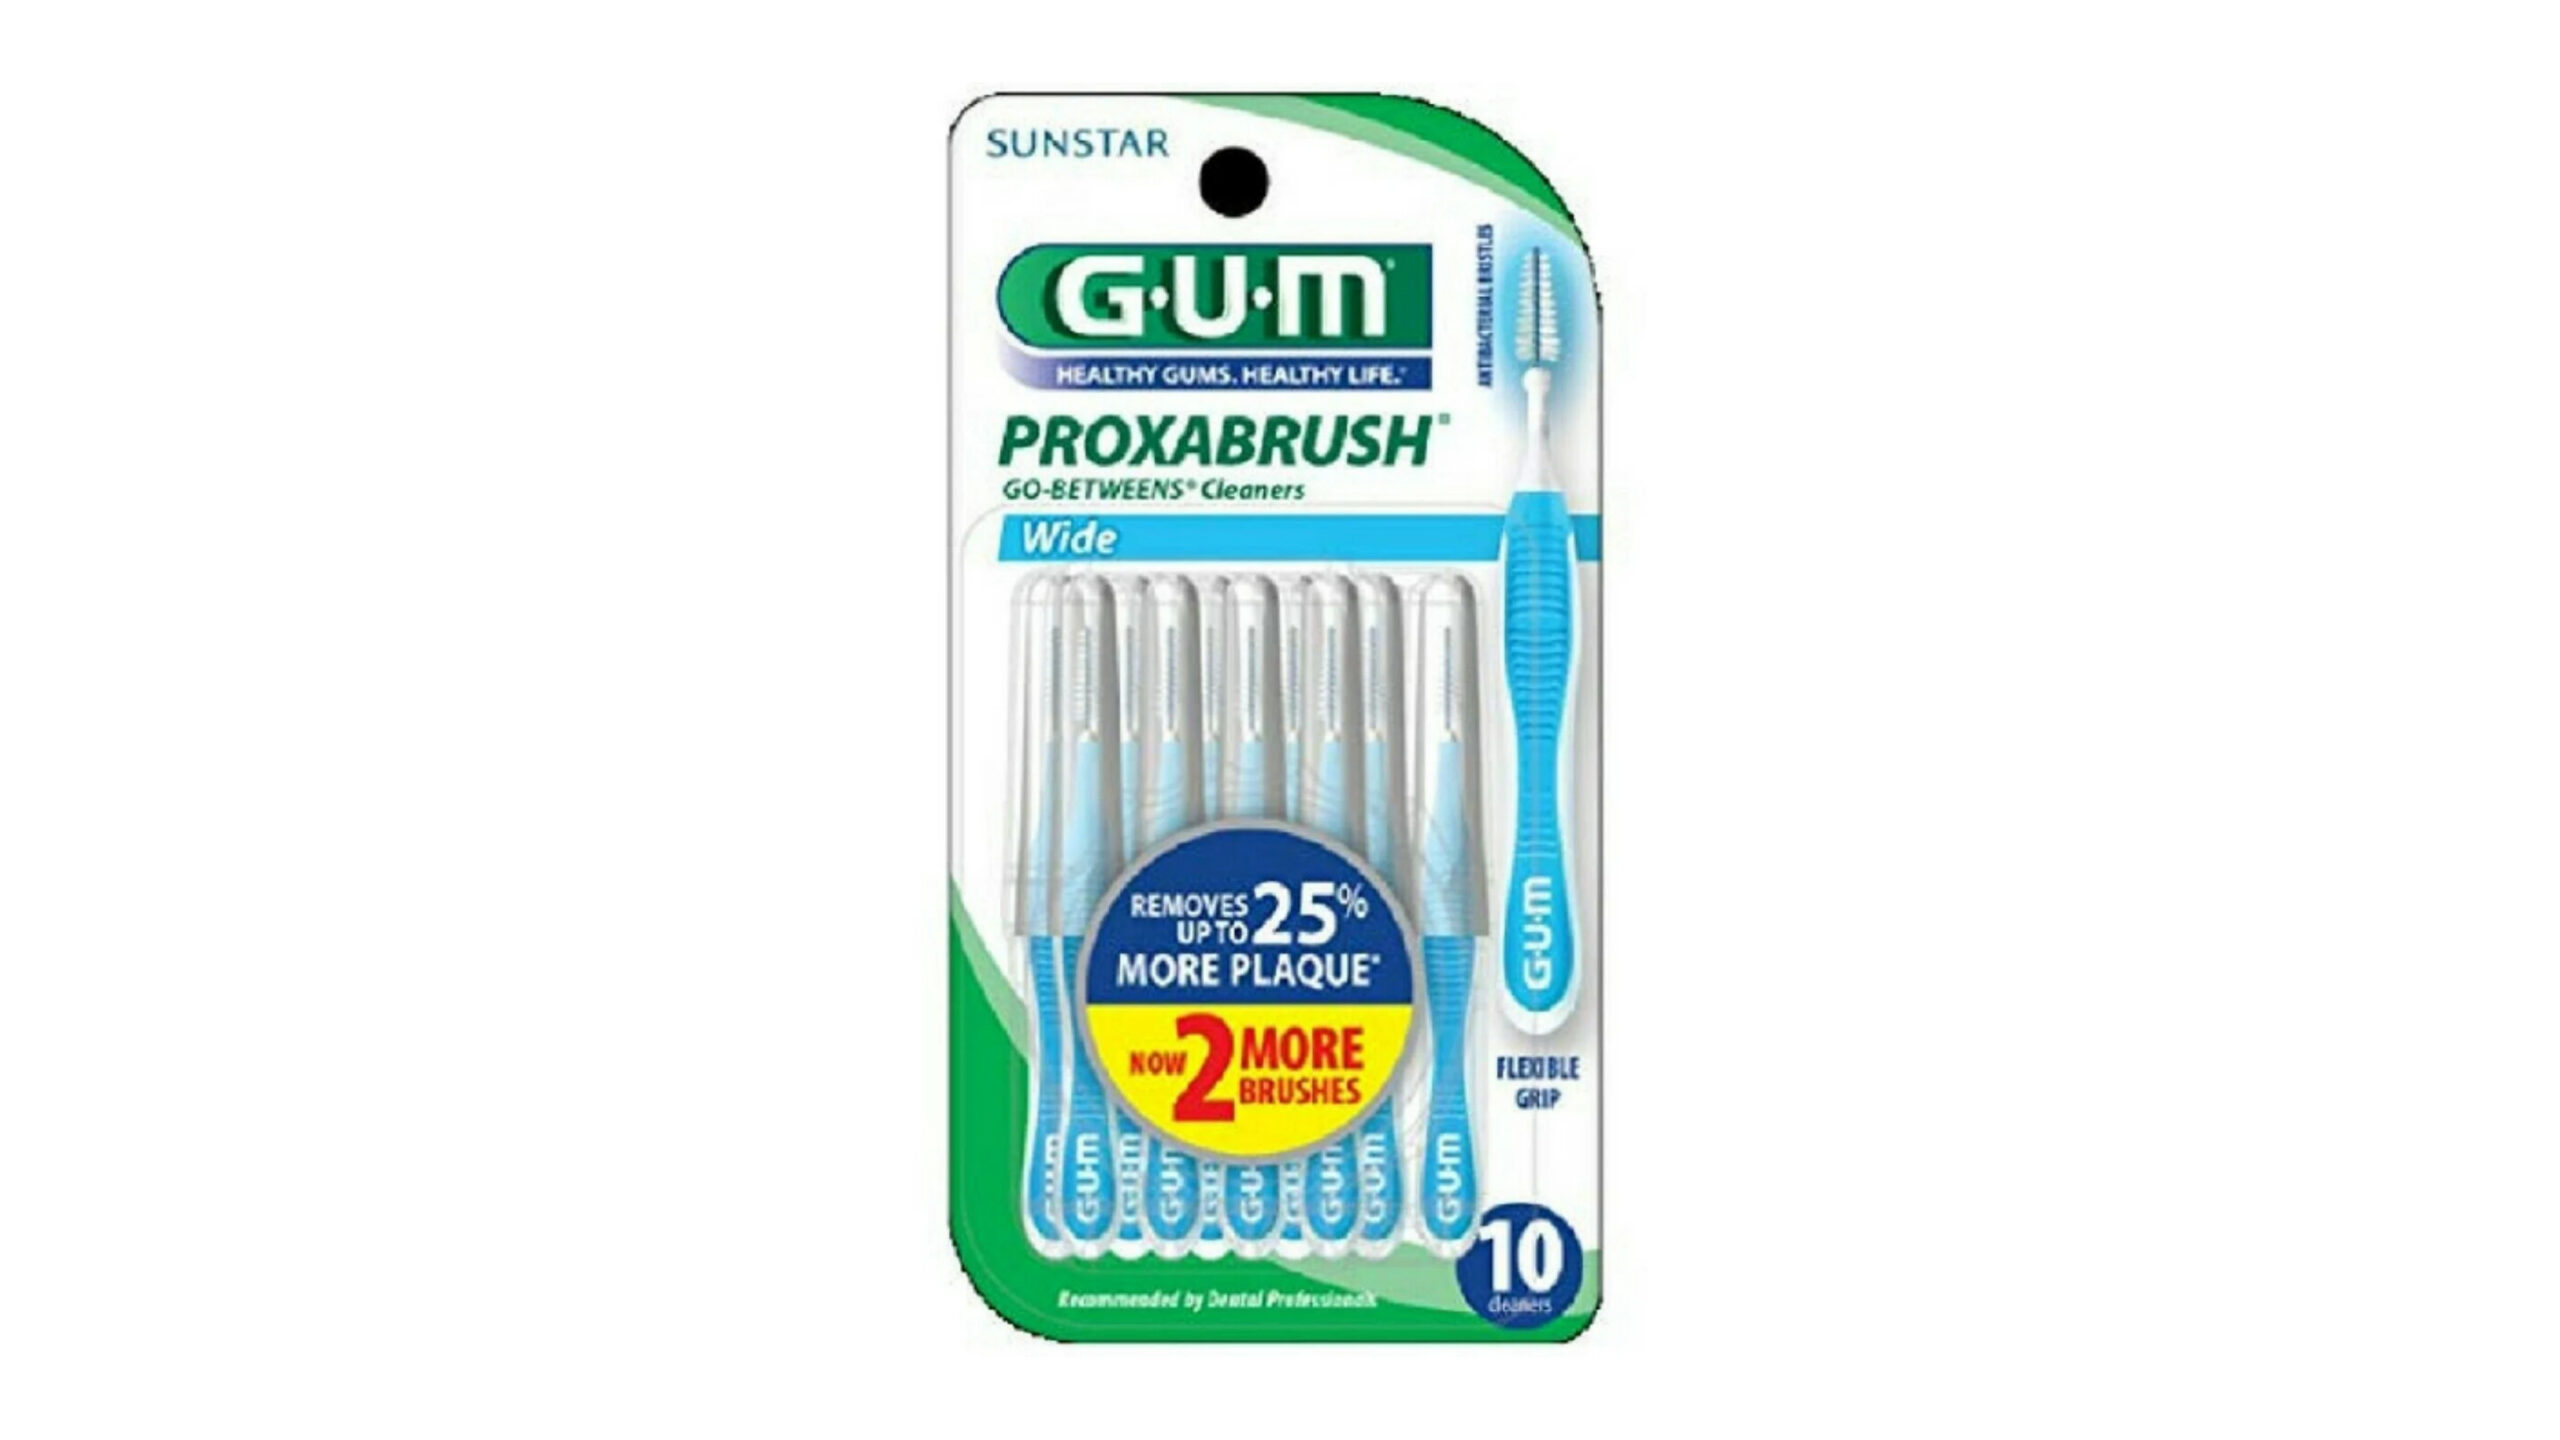 10 gum proxabrush cleaners wide